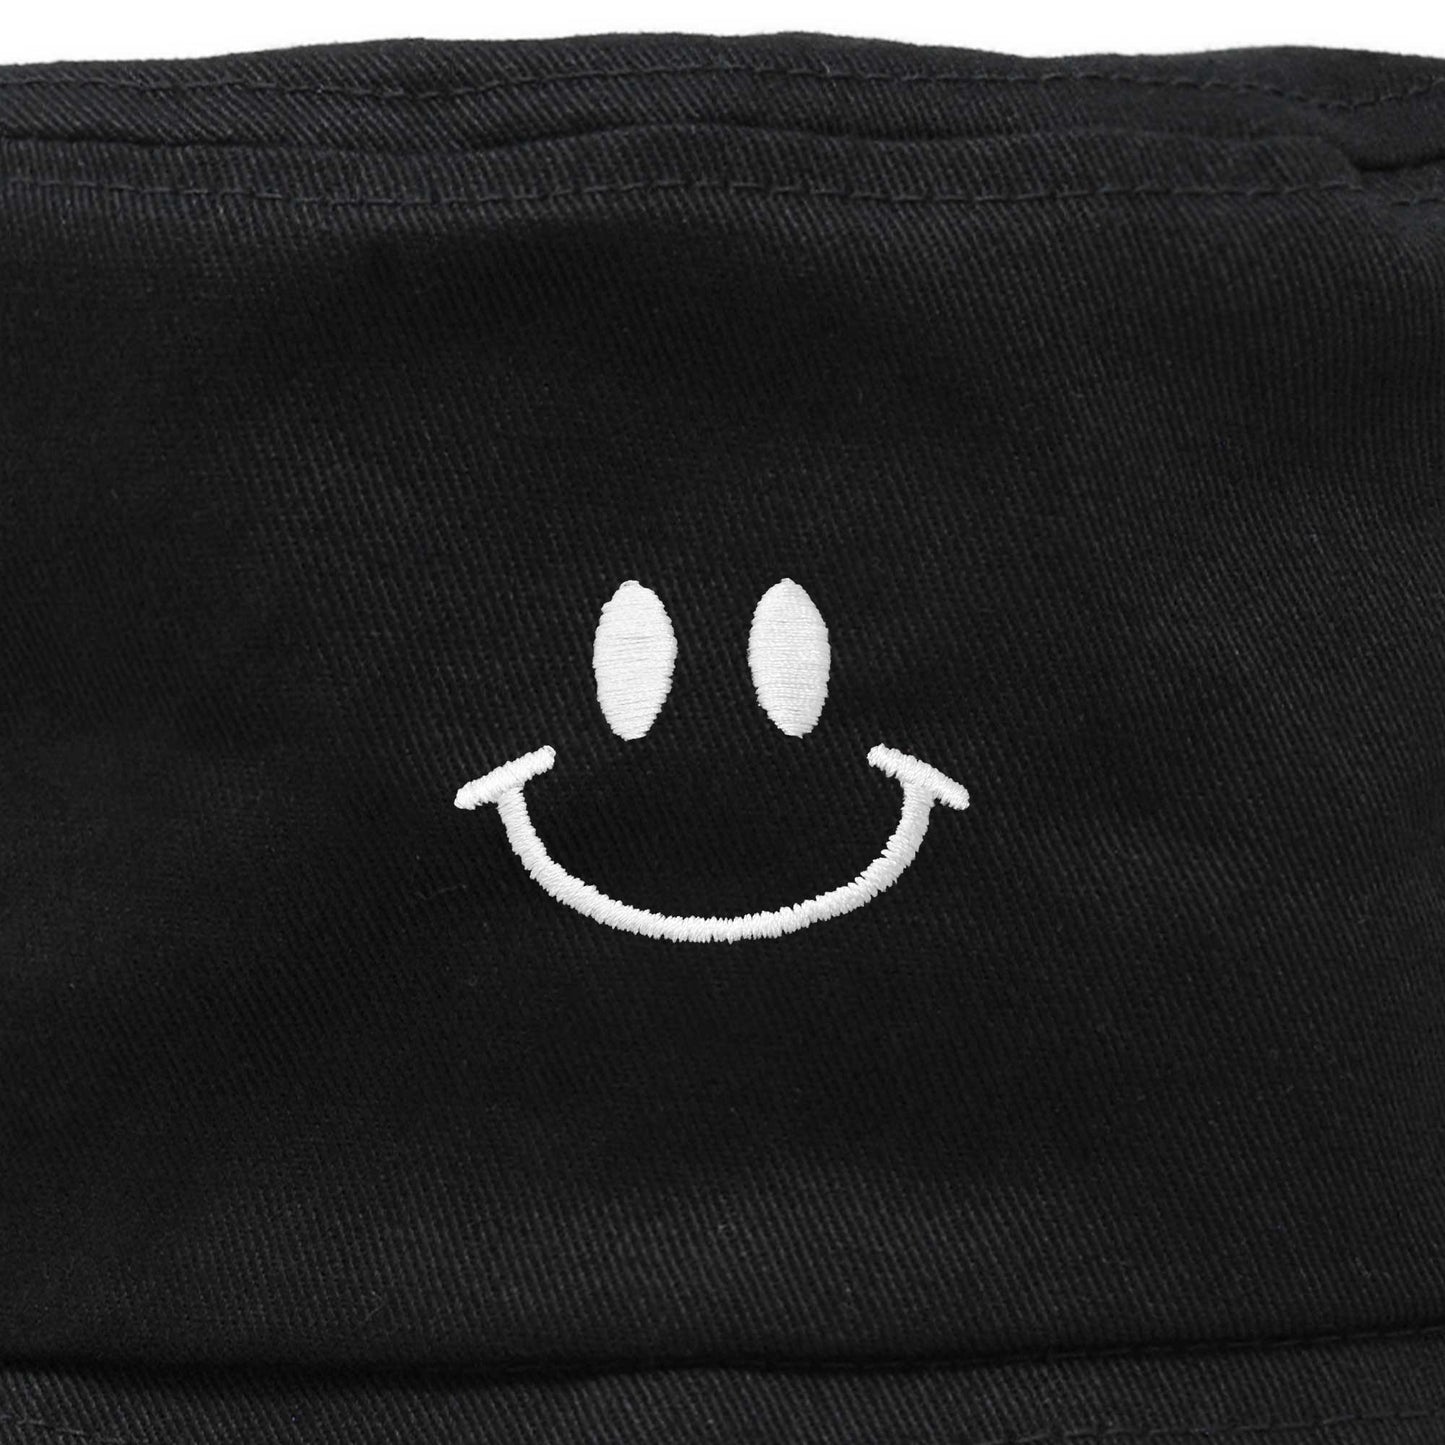 Dalix Smile Face Bucket Hat